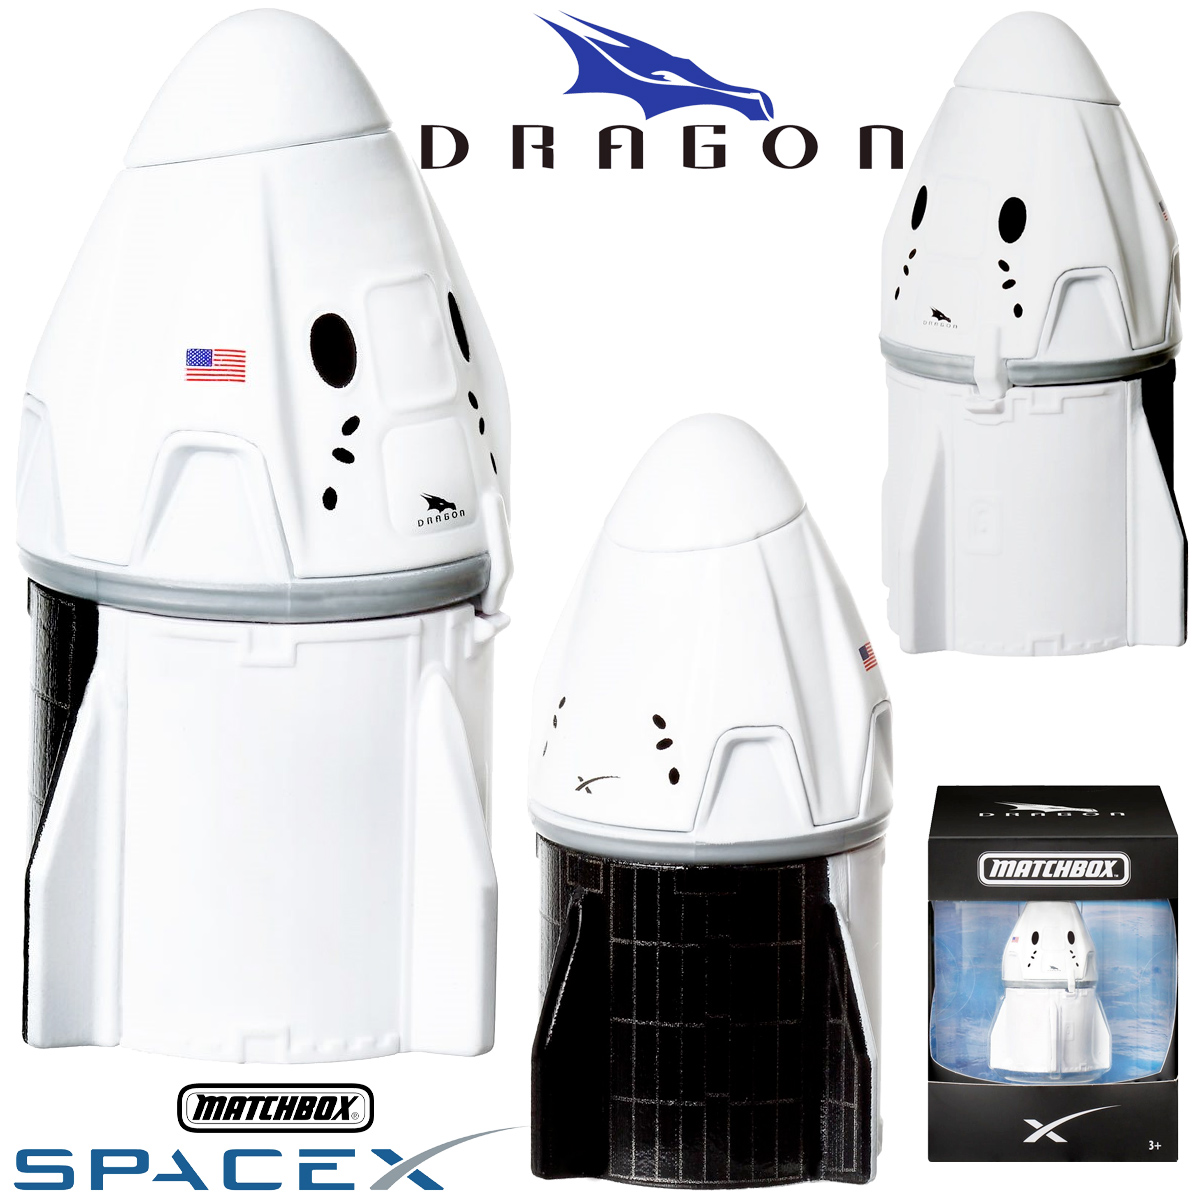 Miniatura da Espaçonave SpaceX Dragon de Metal Die-Cast (Matchbox)